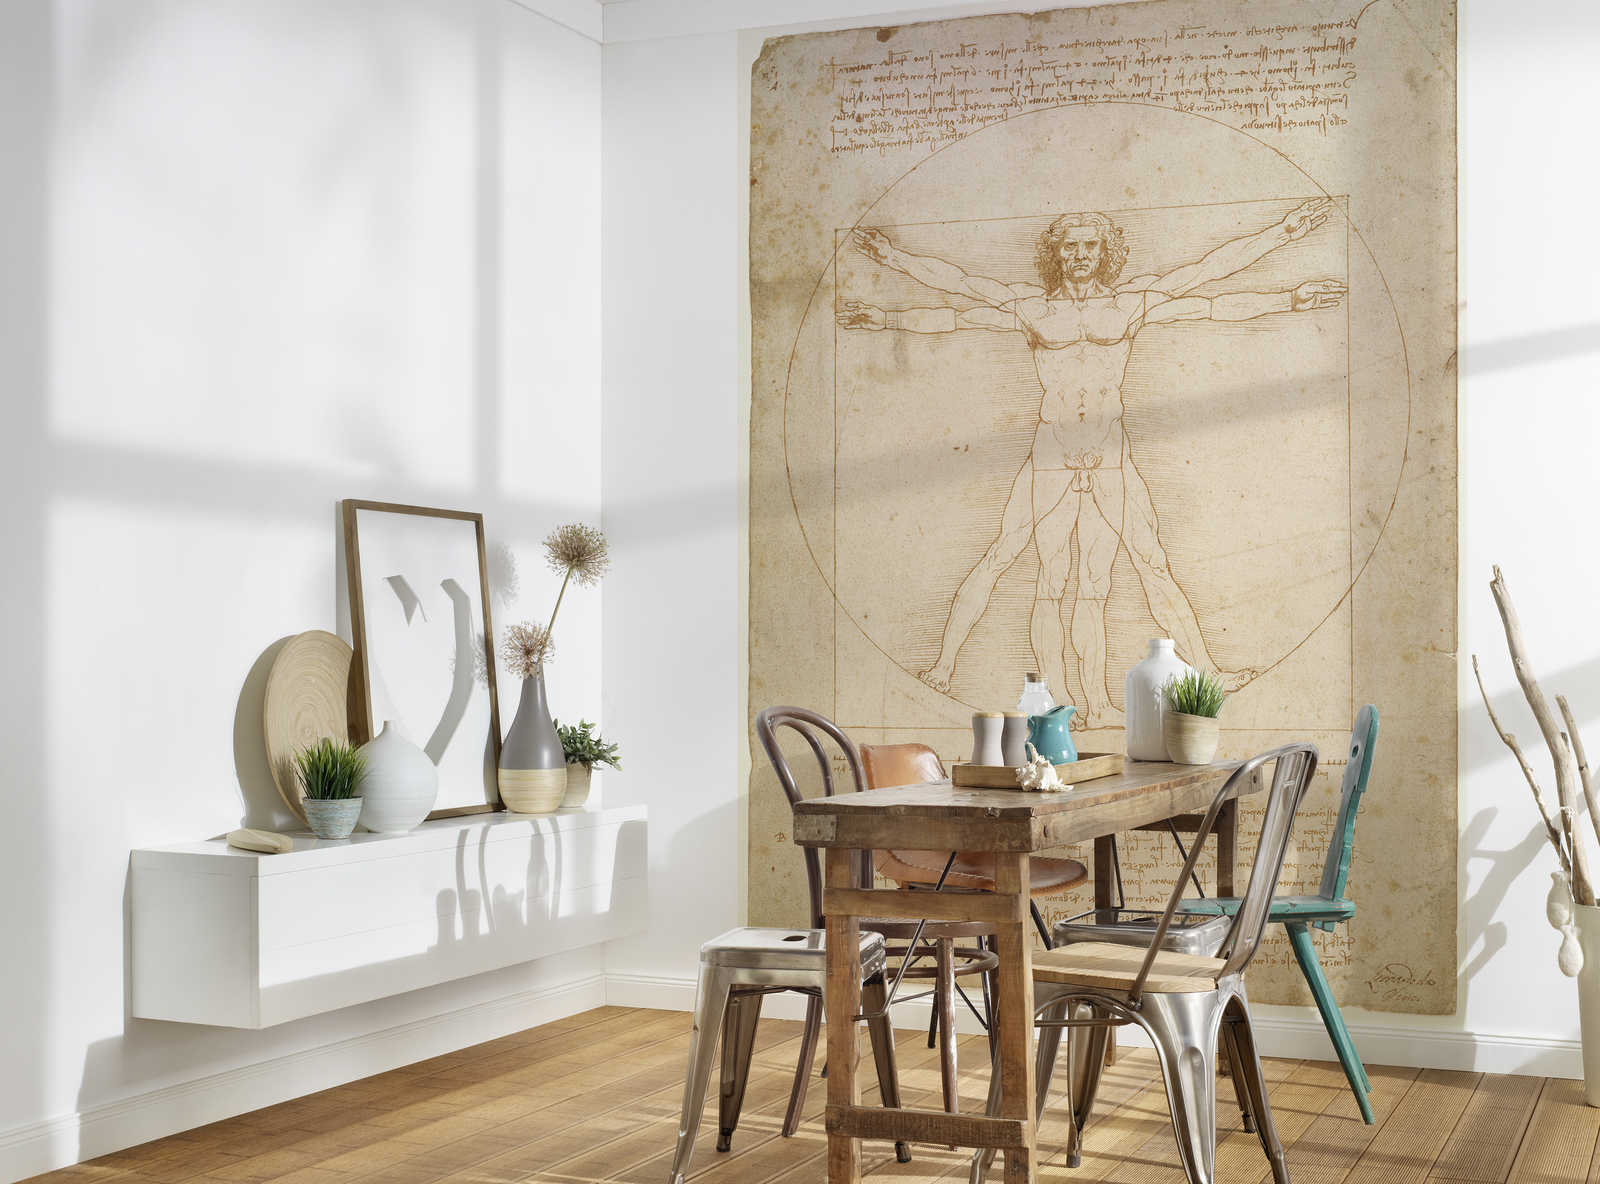             Mural "El hombre de Vitruvio" de Leonardo da Vinci
        